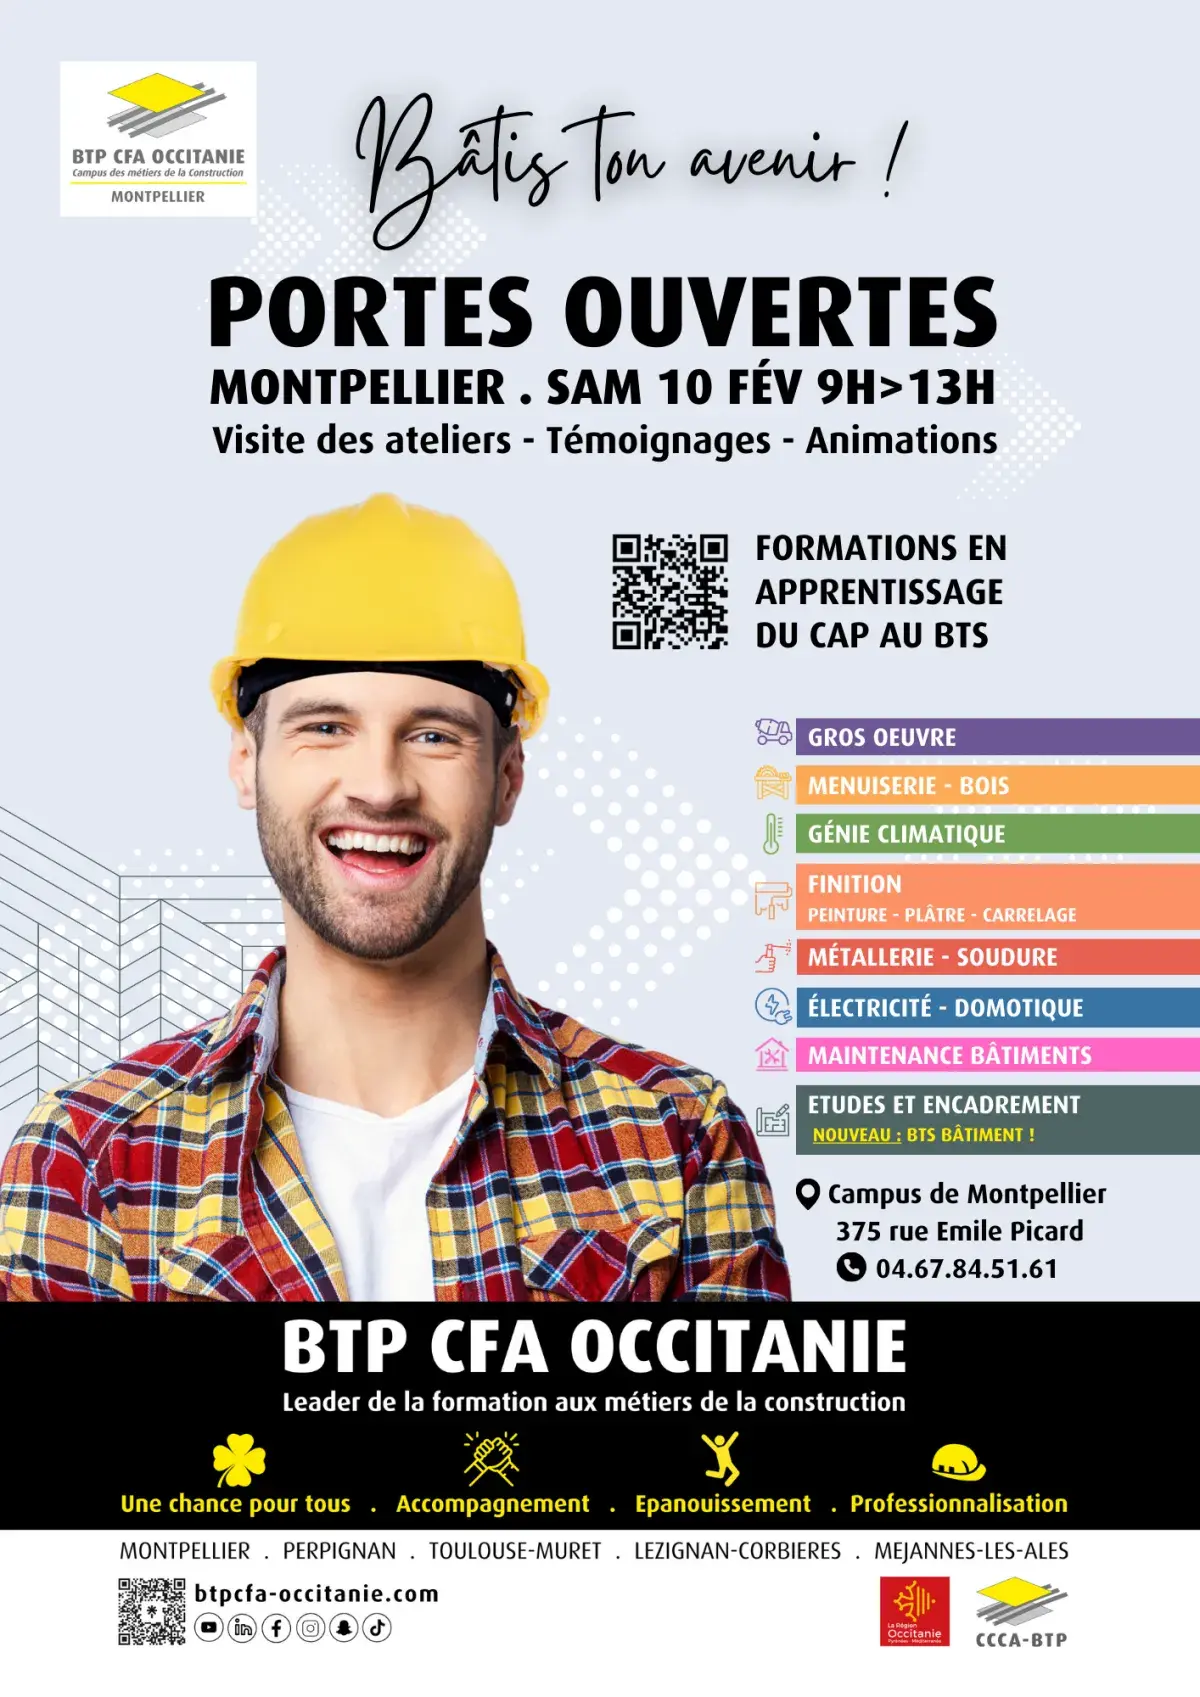 JPO Campus de Montpellier | BTP CFA Occitanie